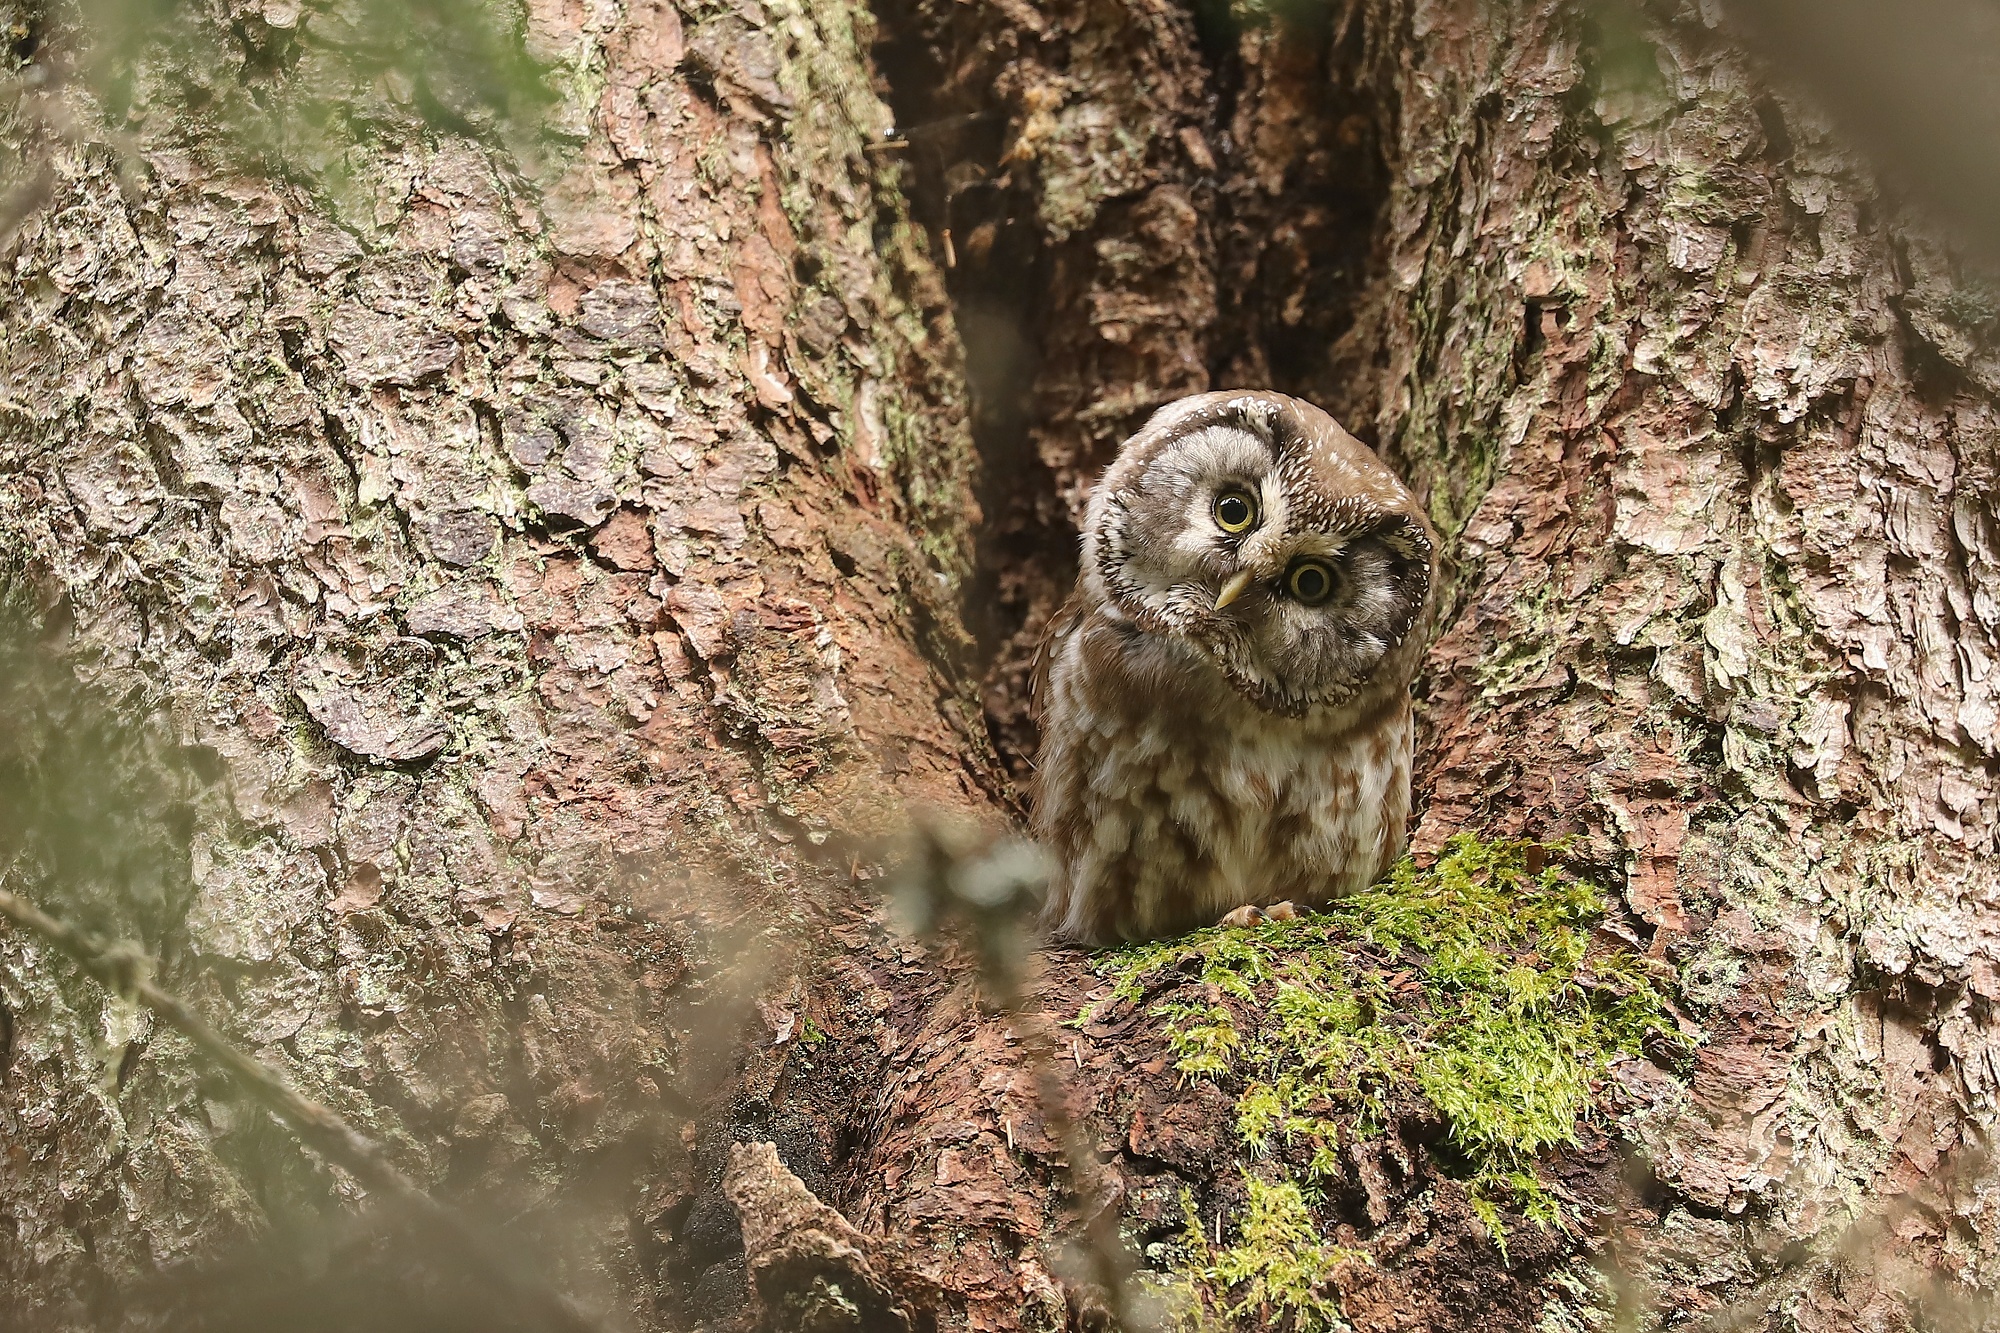 pôtik kapcavý (Aegolius funereus) Boreal owl, Parcul National Calimani, Romania Canon EOS 6d mark II + Canon 100-400 f4.5-5.6 L IS II USM, 400mm, 1/100, f5.6, ISO 1000, 15. jún 2021